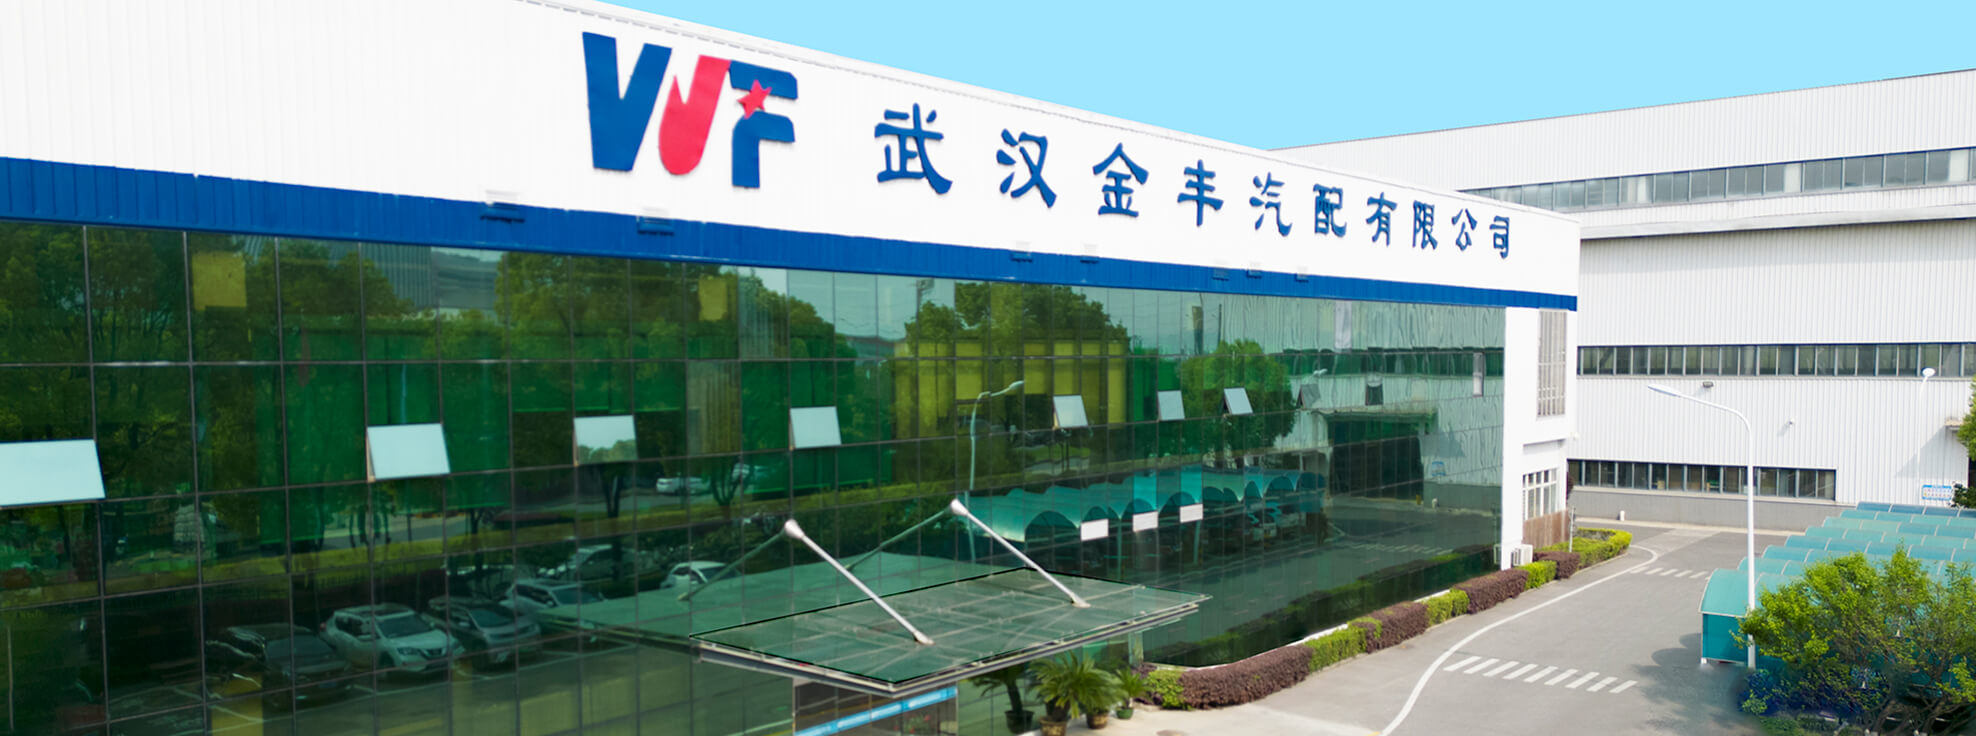 WJF (China)